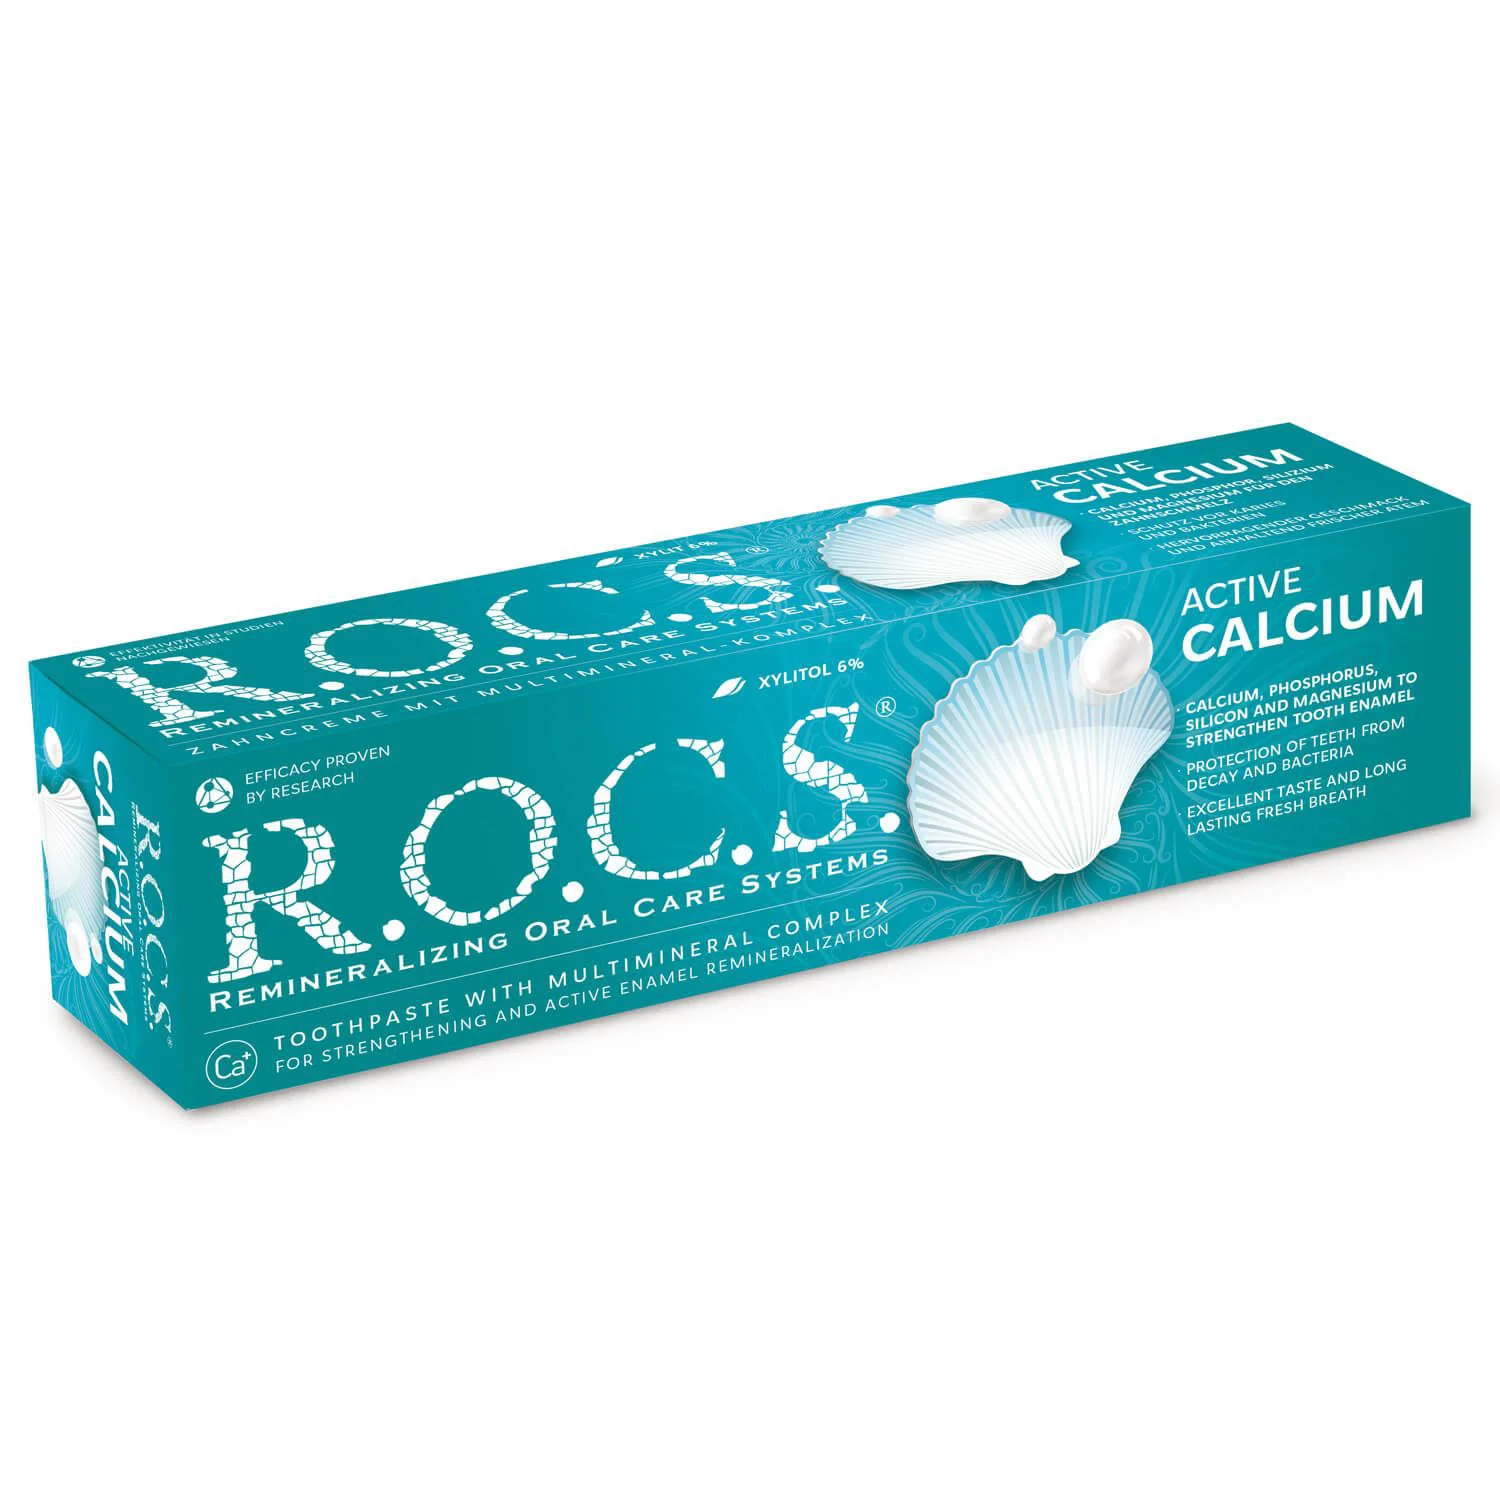 Pasta de dinti ROCS Active Calcium, 94 gr.